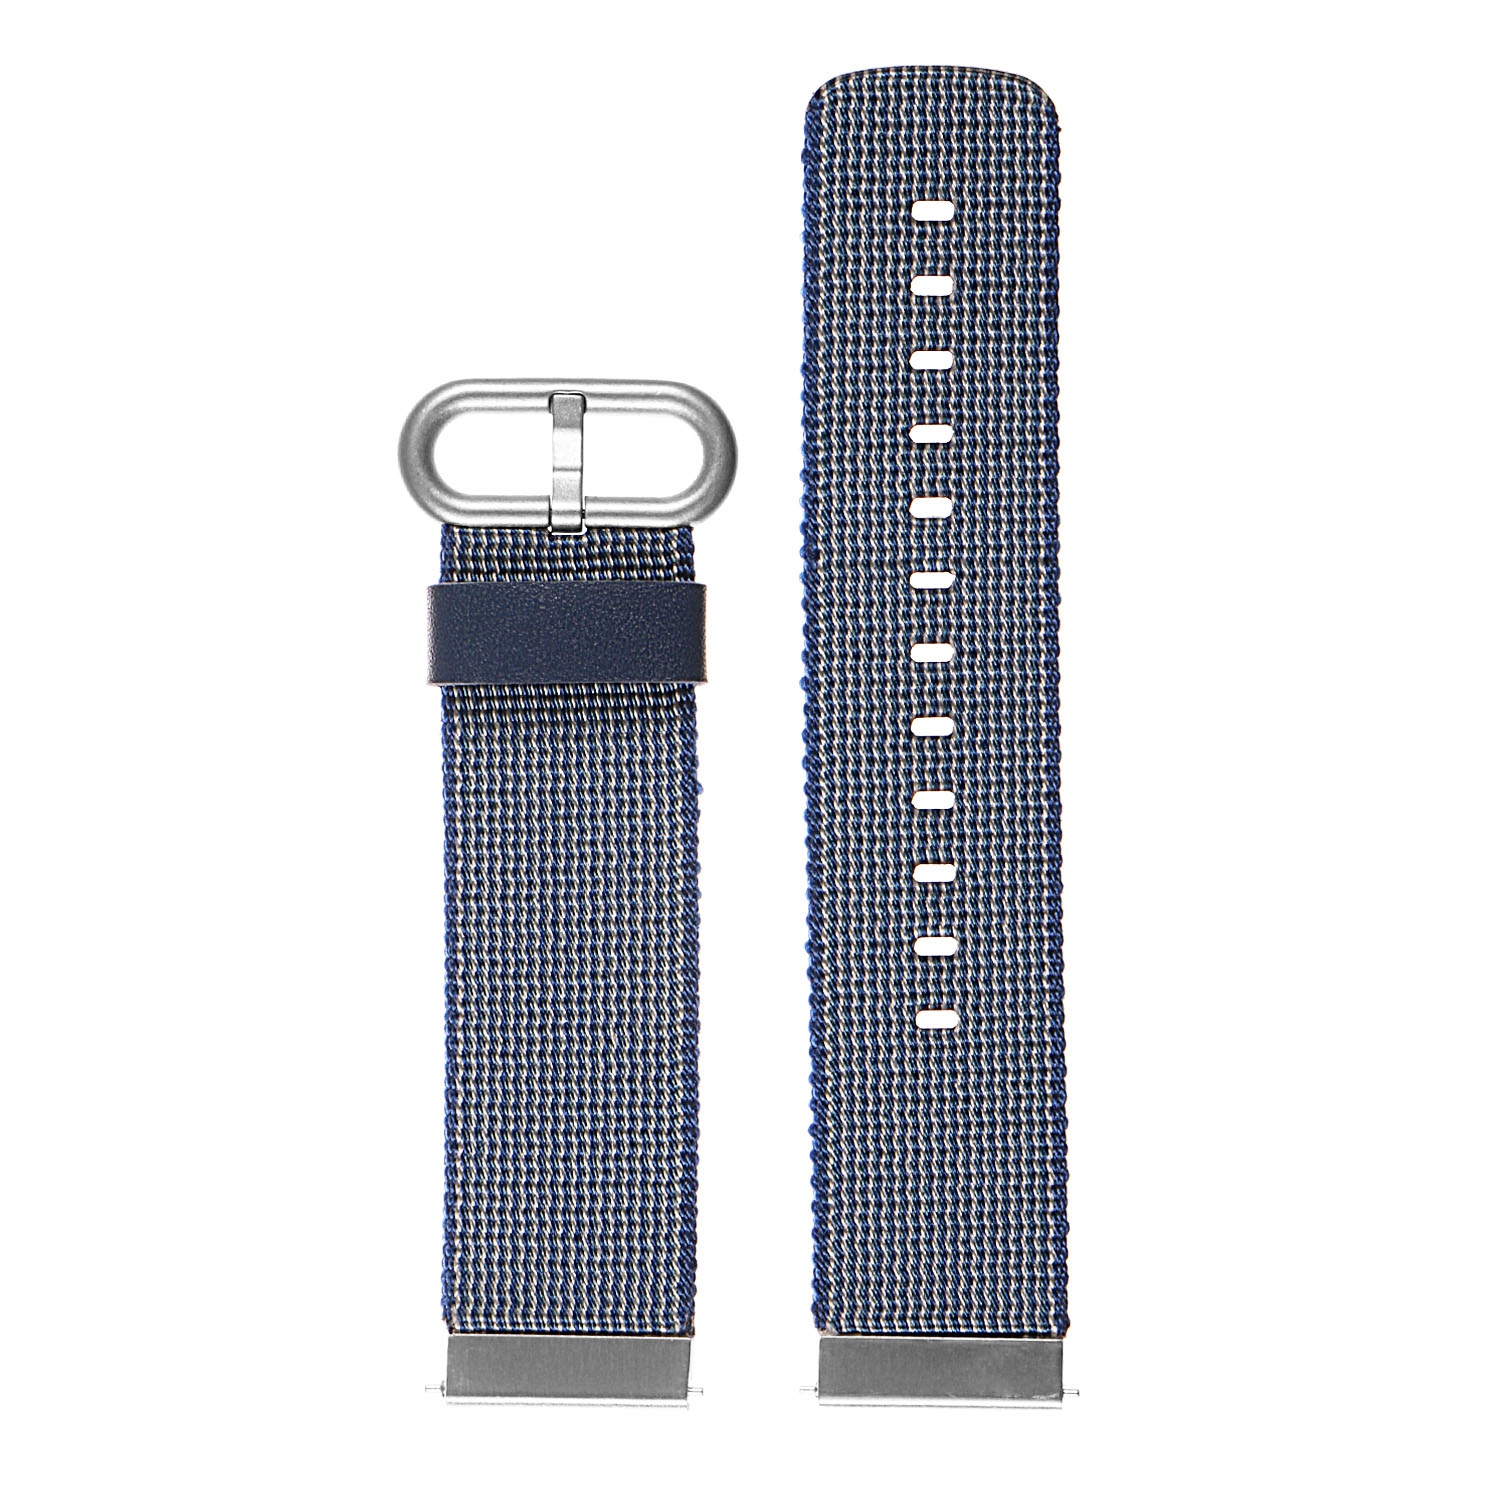 StrapsCo Ballistic Woven Nylon Replacement Watch Band Strap for Samsung Gear S2 Classic - Dark Blue